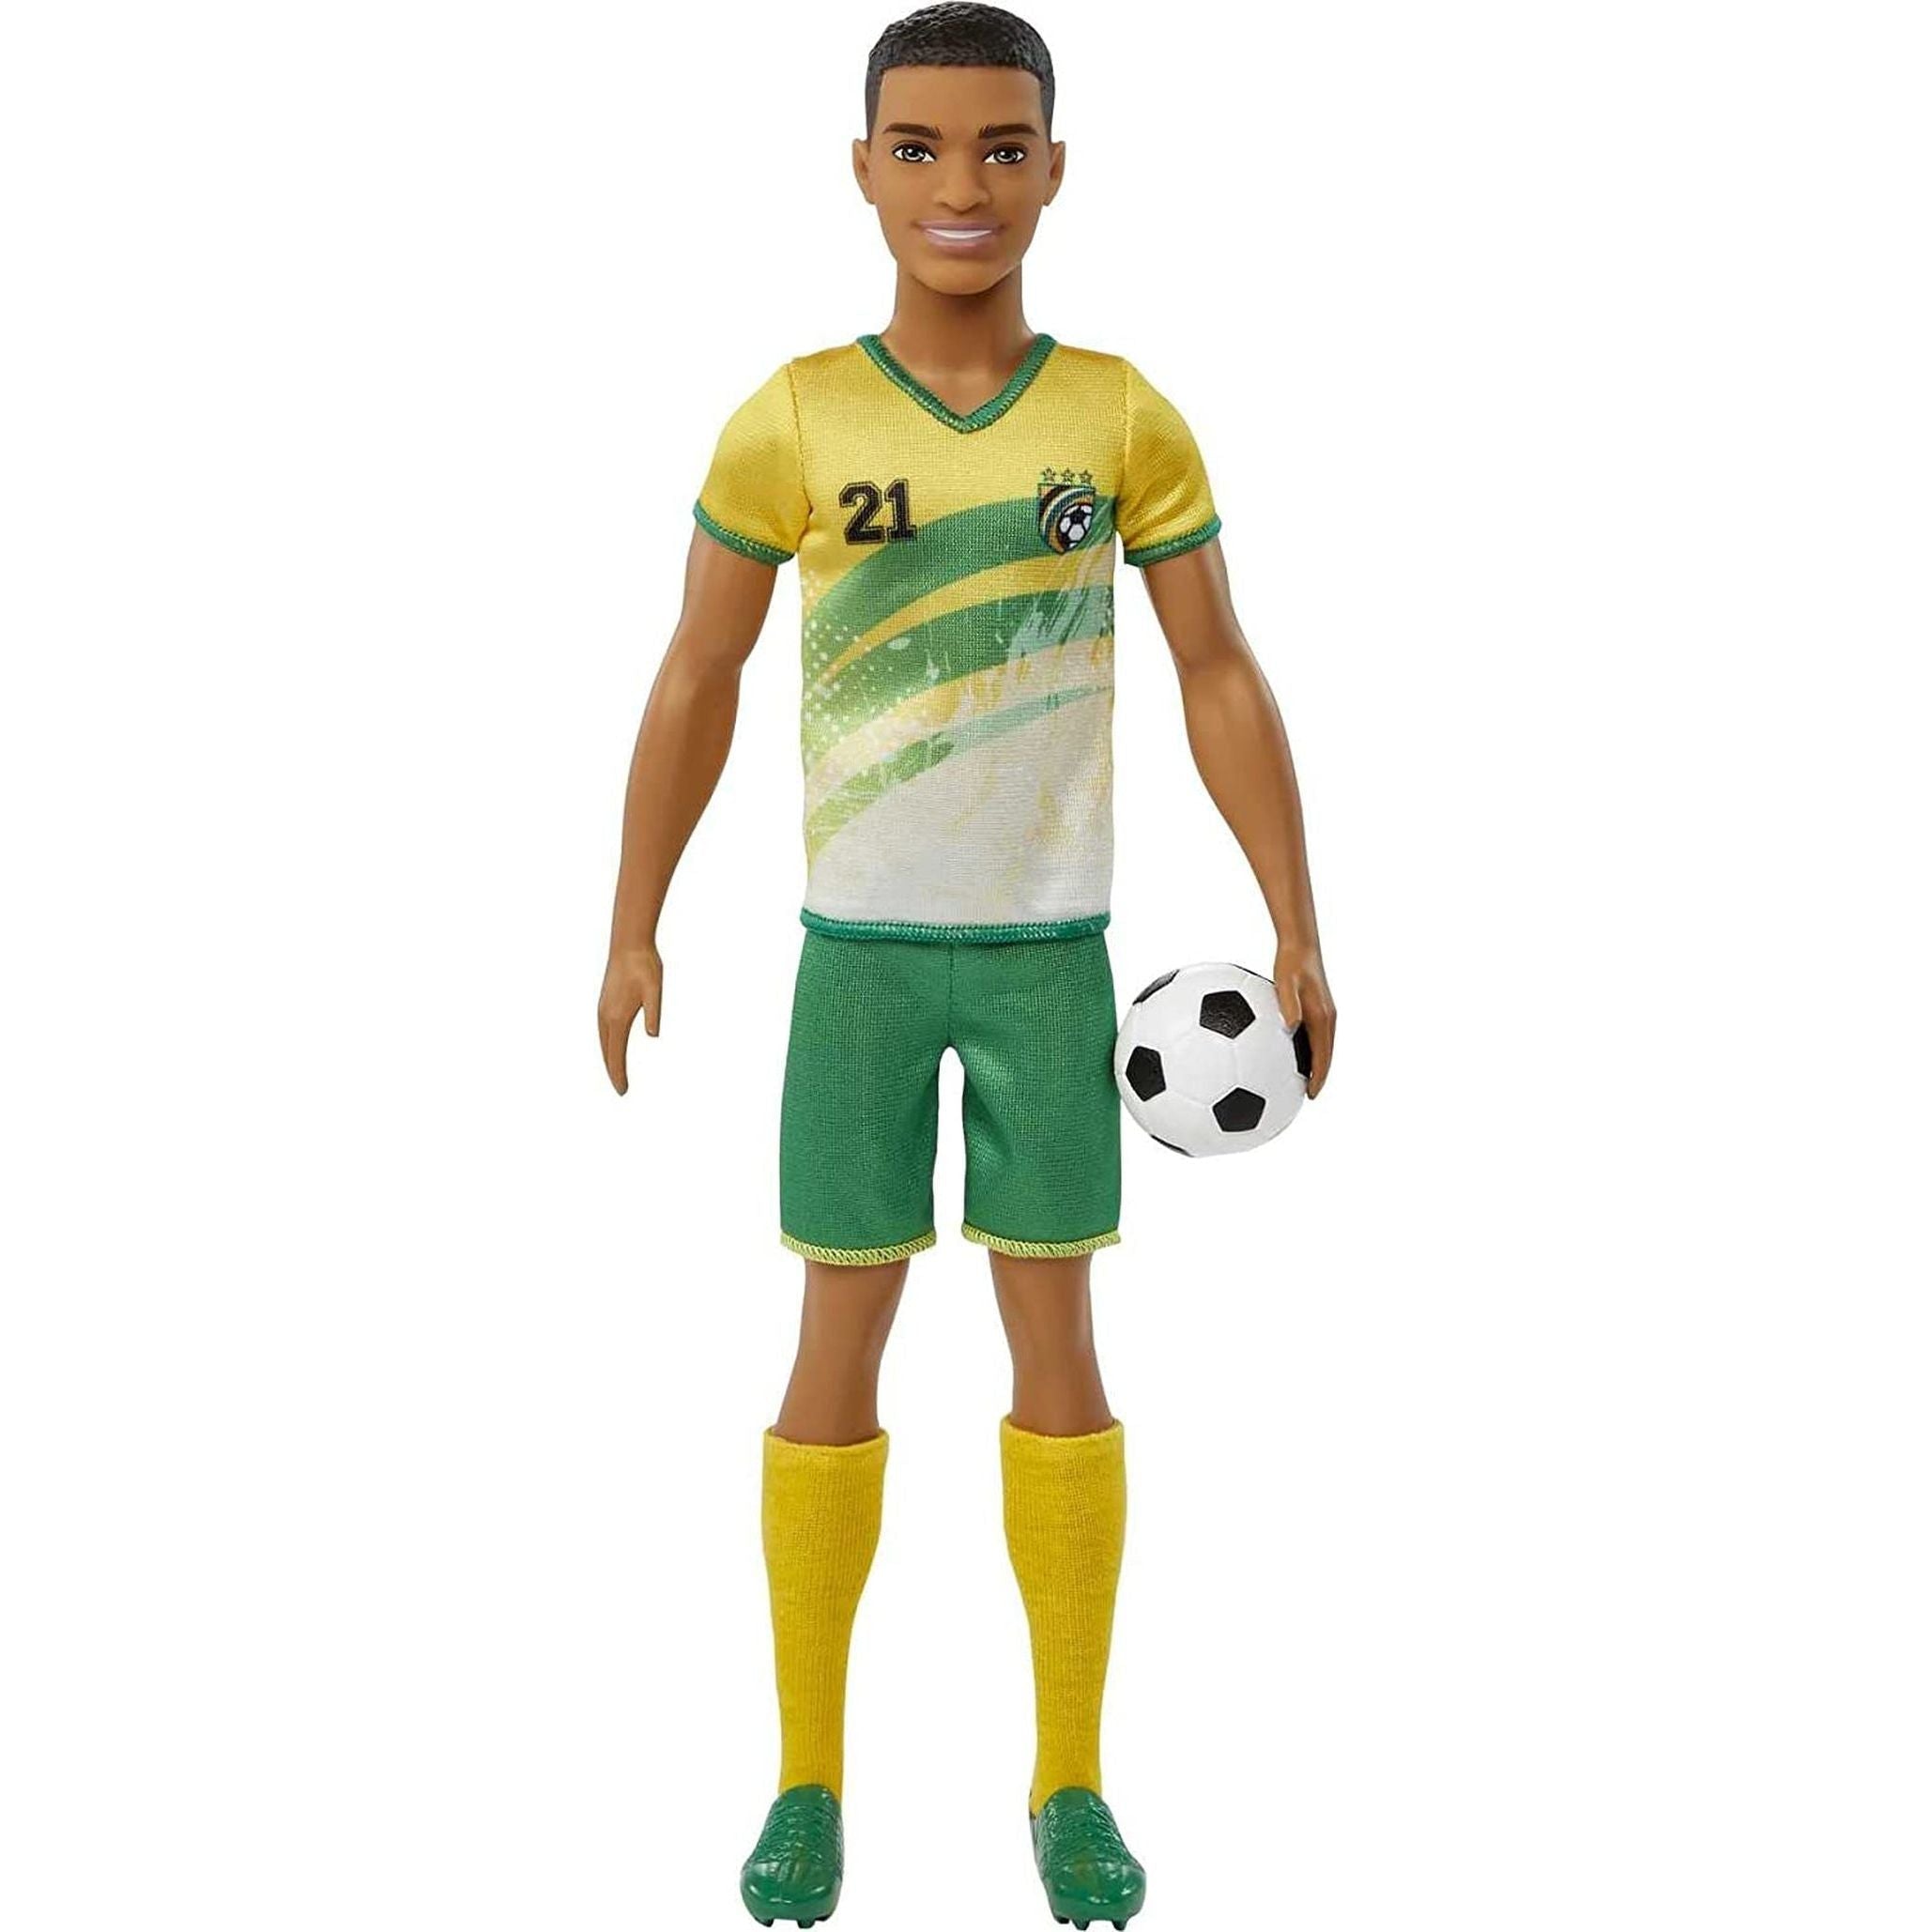 Soccer Ken Doll